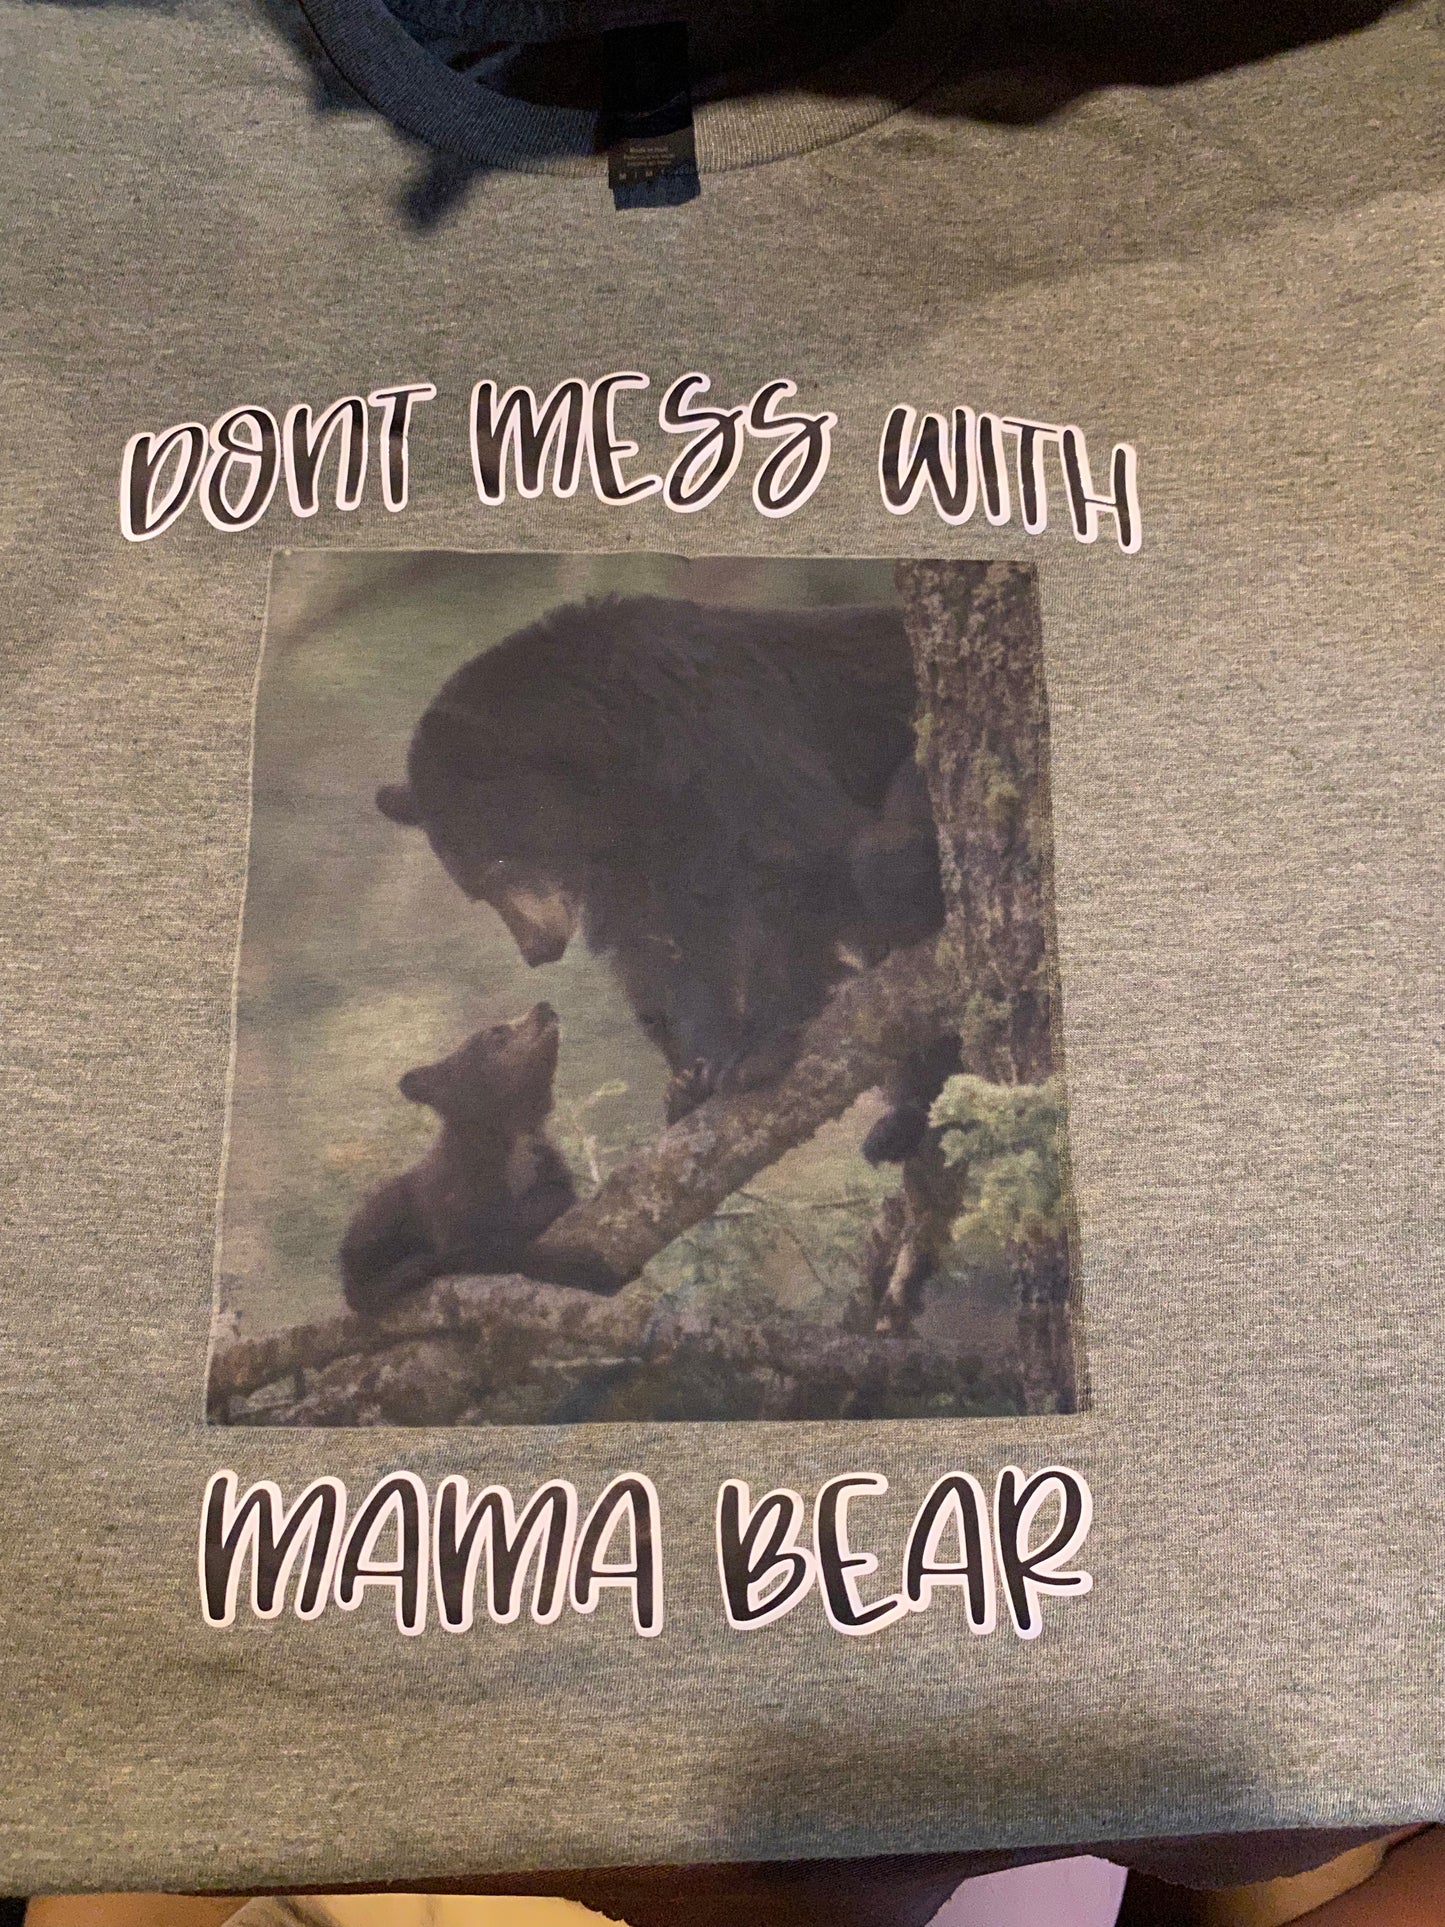 T Shirt- Don’t mess with MAMA bear